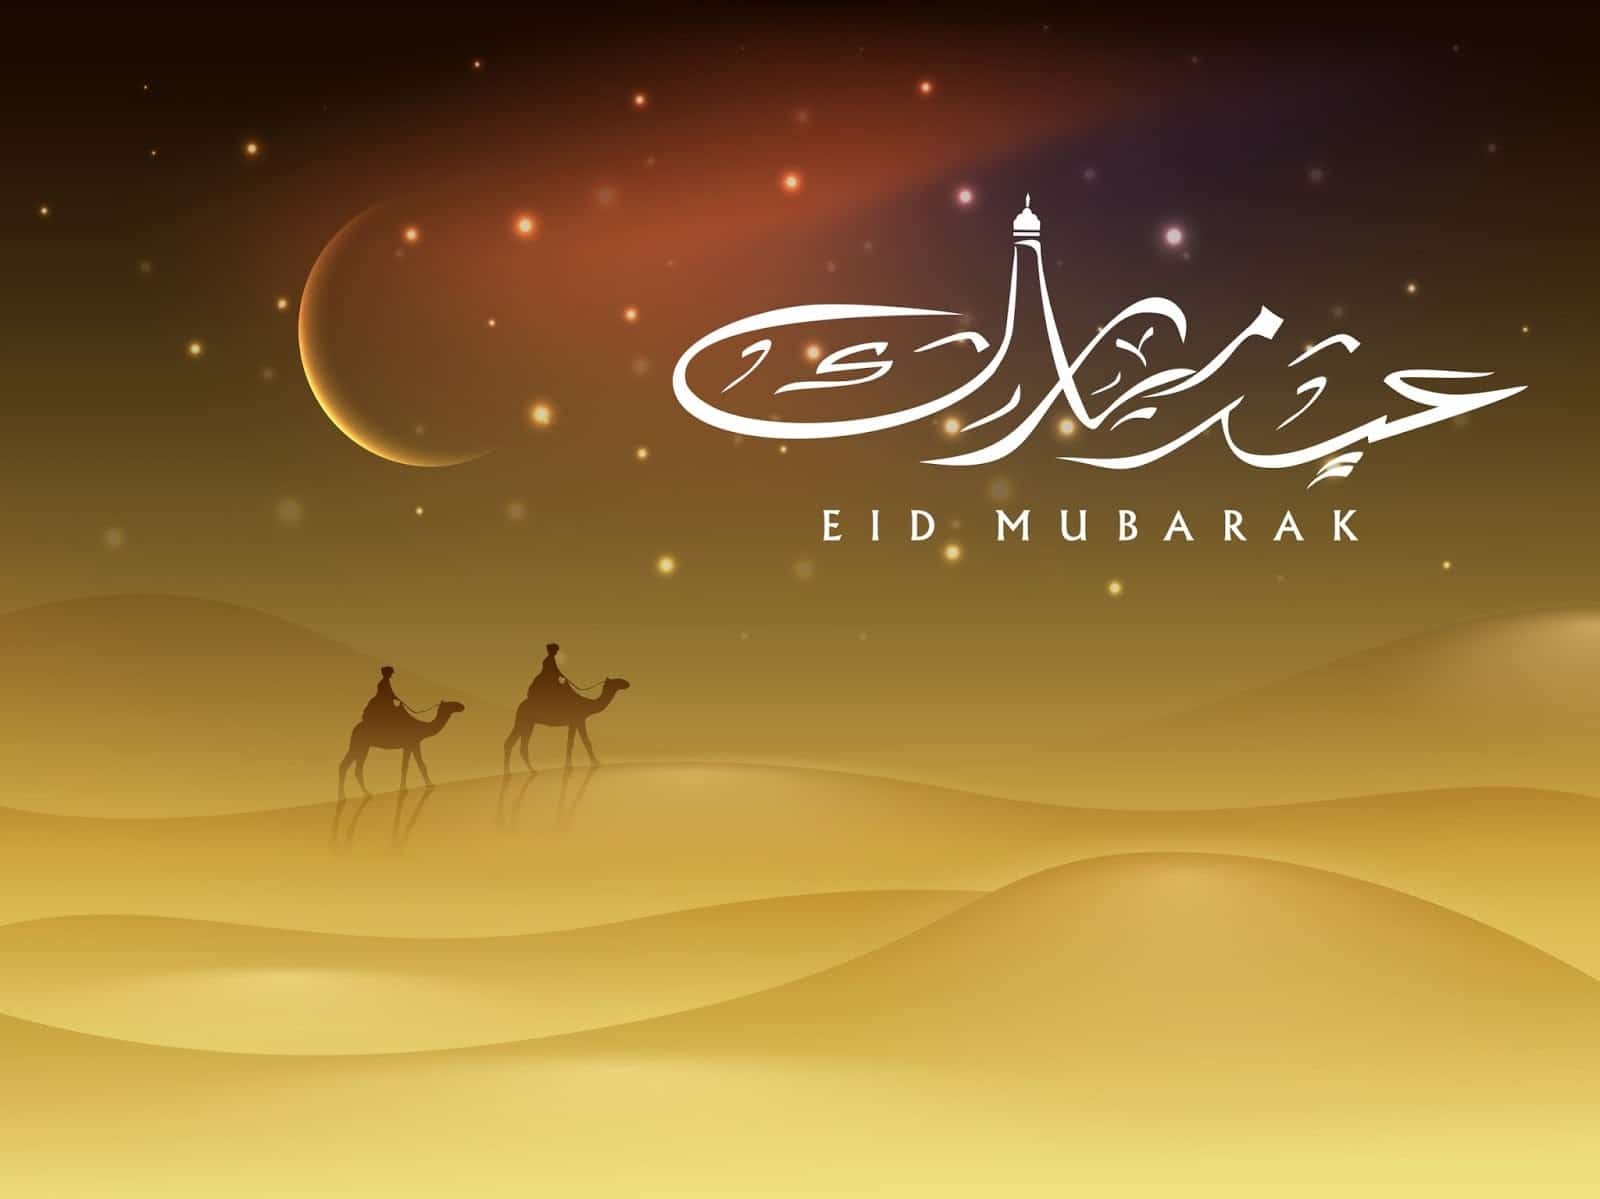 48++ Eid ul adha mubarak in arabic text messages ideas in 2021 